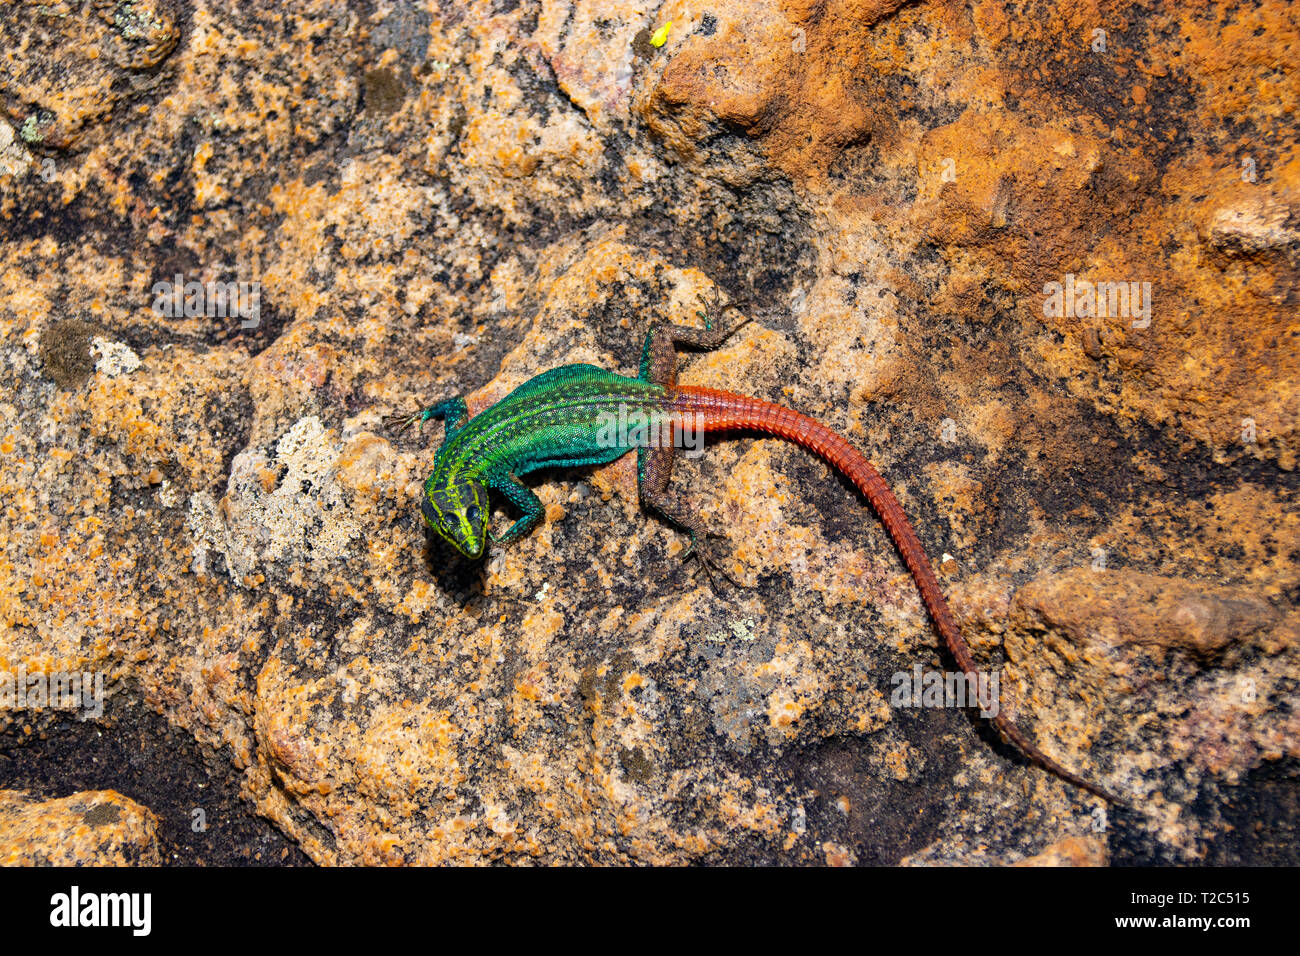 A colorful male Broadleys flat lizard (Platysaurus broadleyi) basking, South Africa Stock Photo